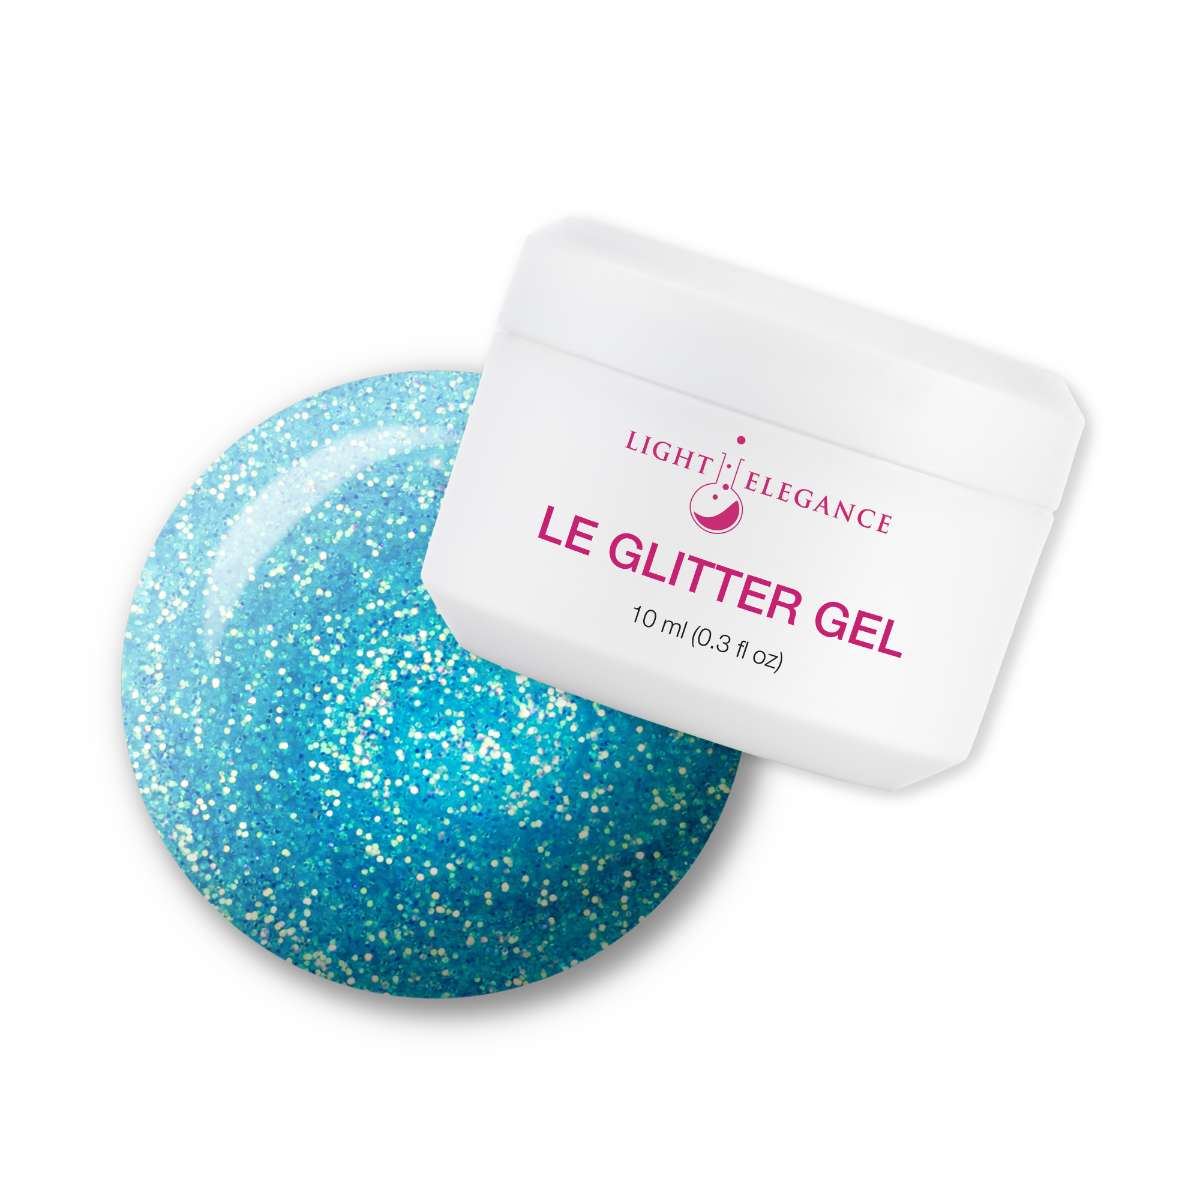 Light Elegance Glitter Gel - Snow Cone :: New Packaging